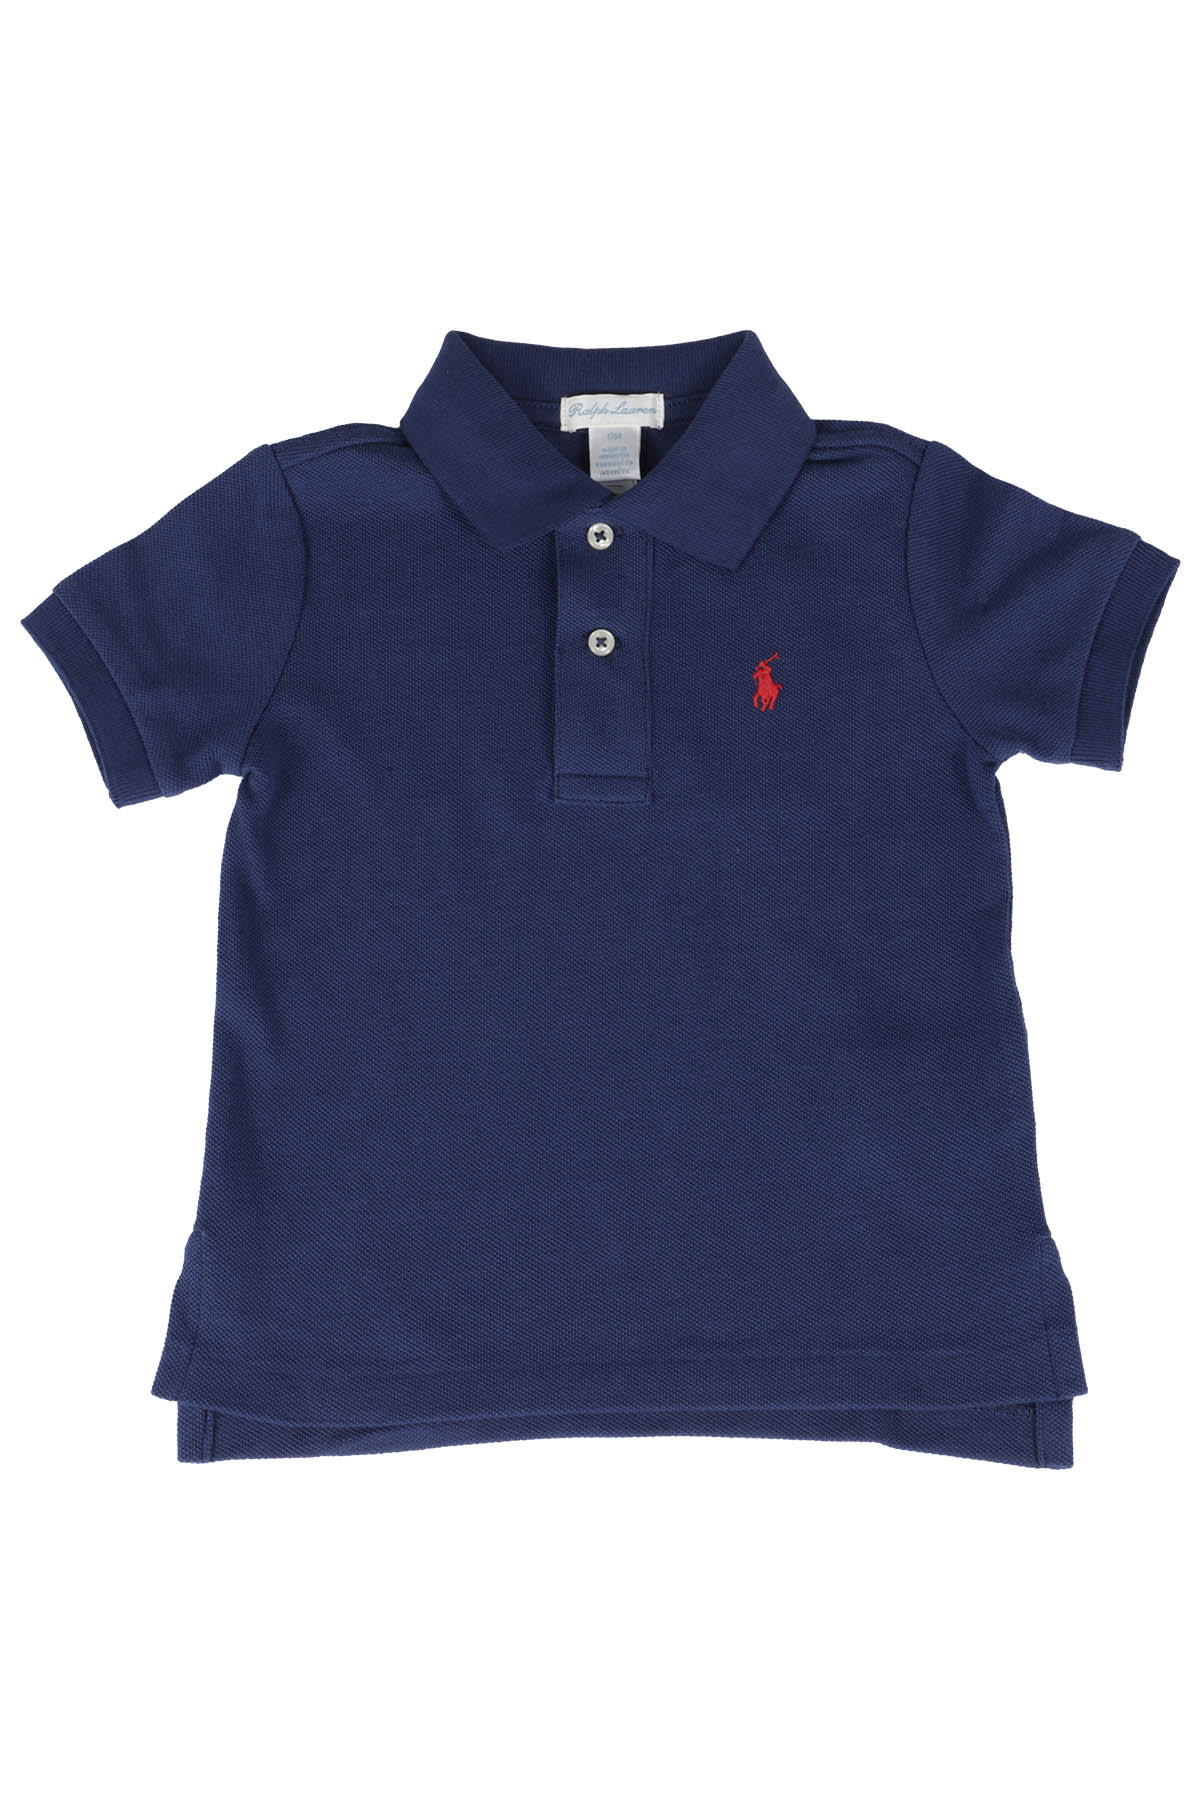 Polo Ralph Lauren Babies' Polo Shirt In Navy